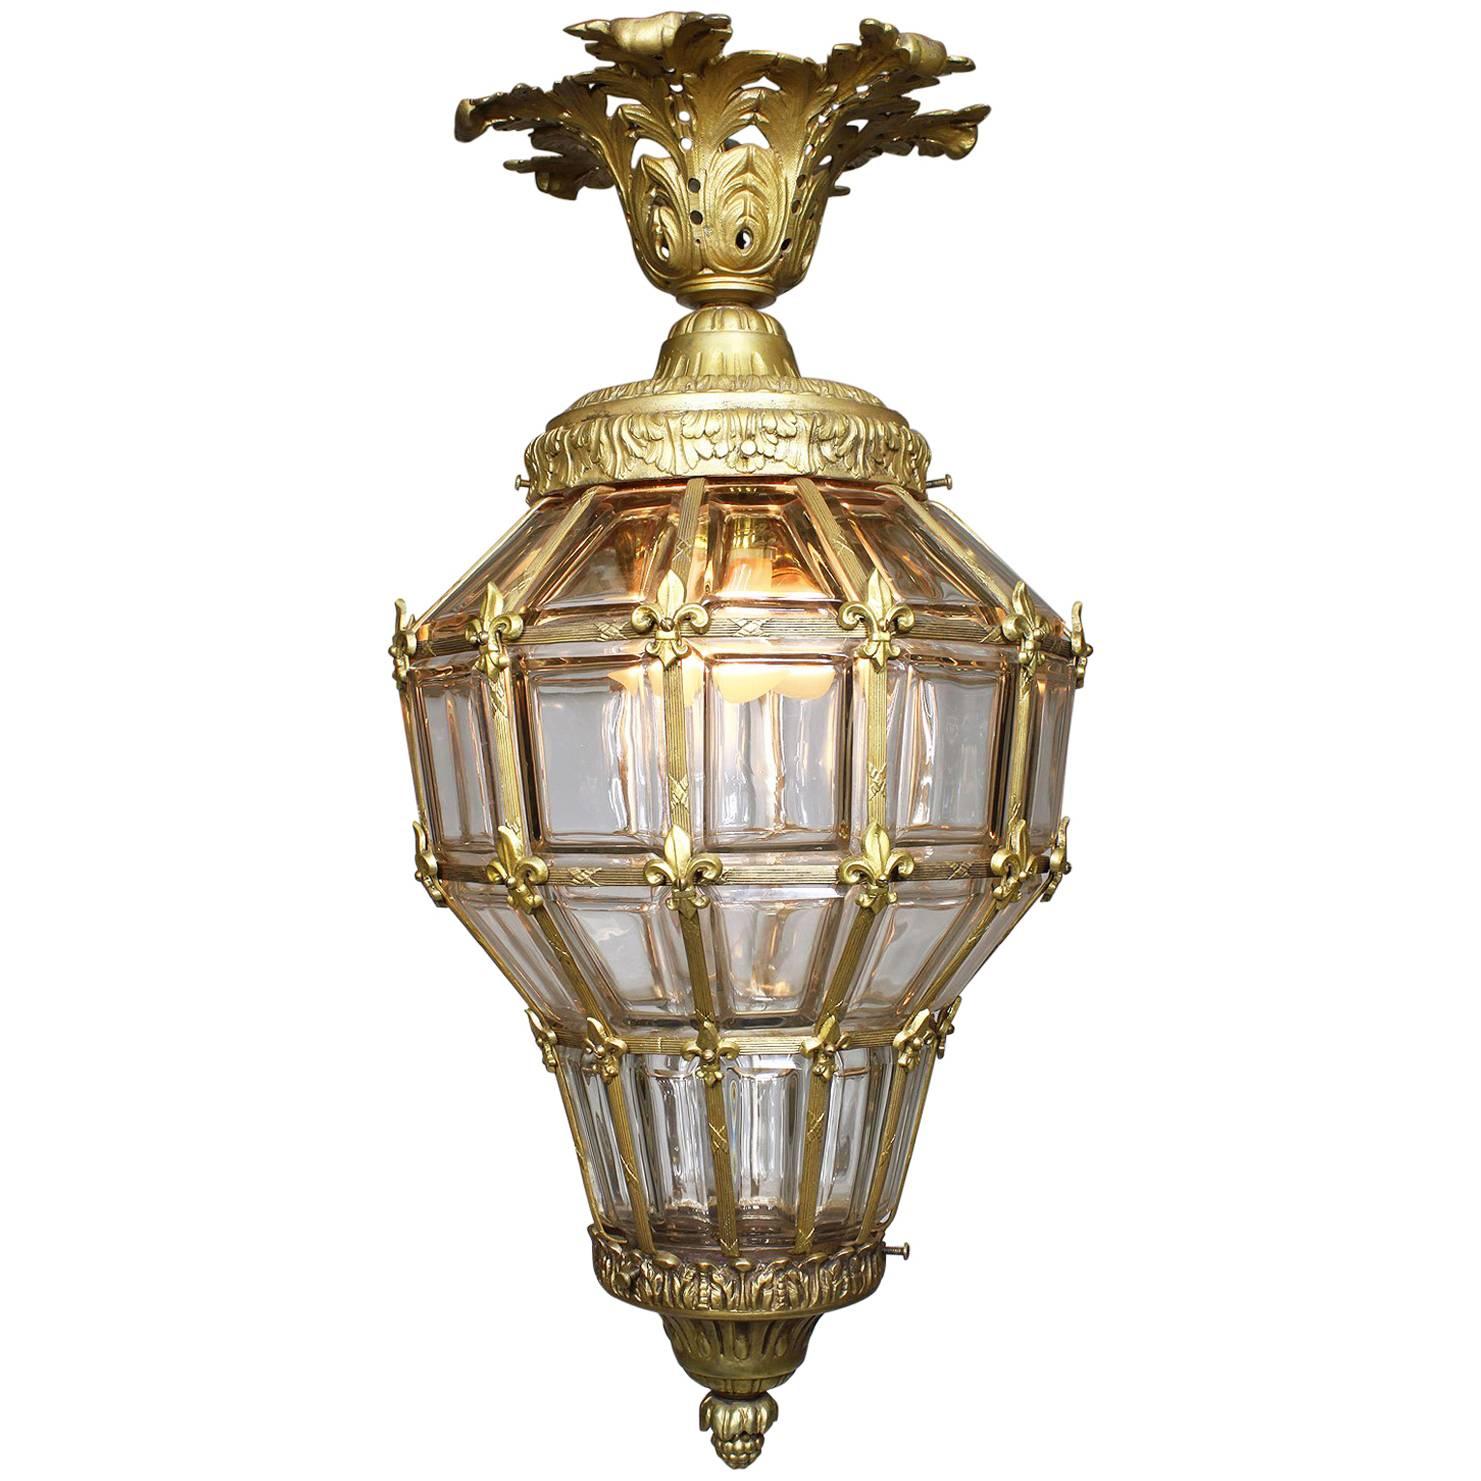 French Early 20th Century Louis XIV Style Gilt Bronze "Versailles" Style Lantern